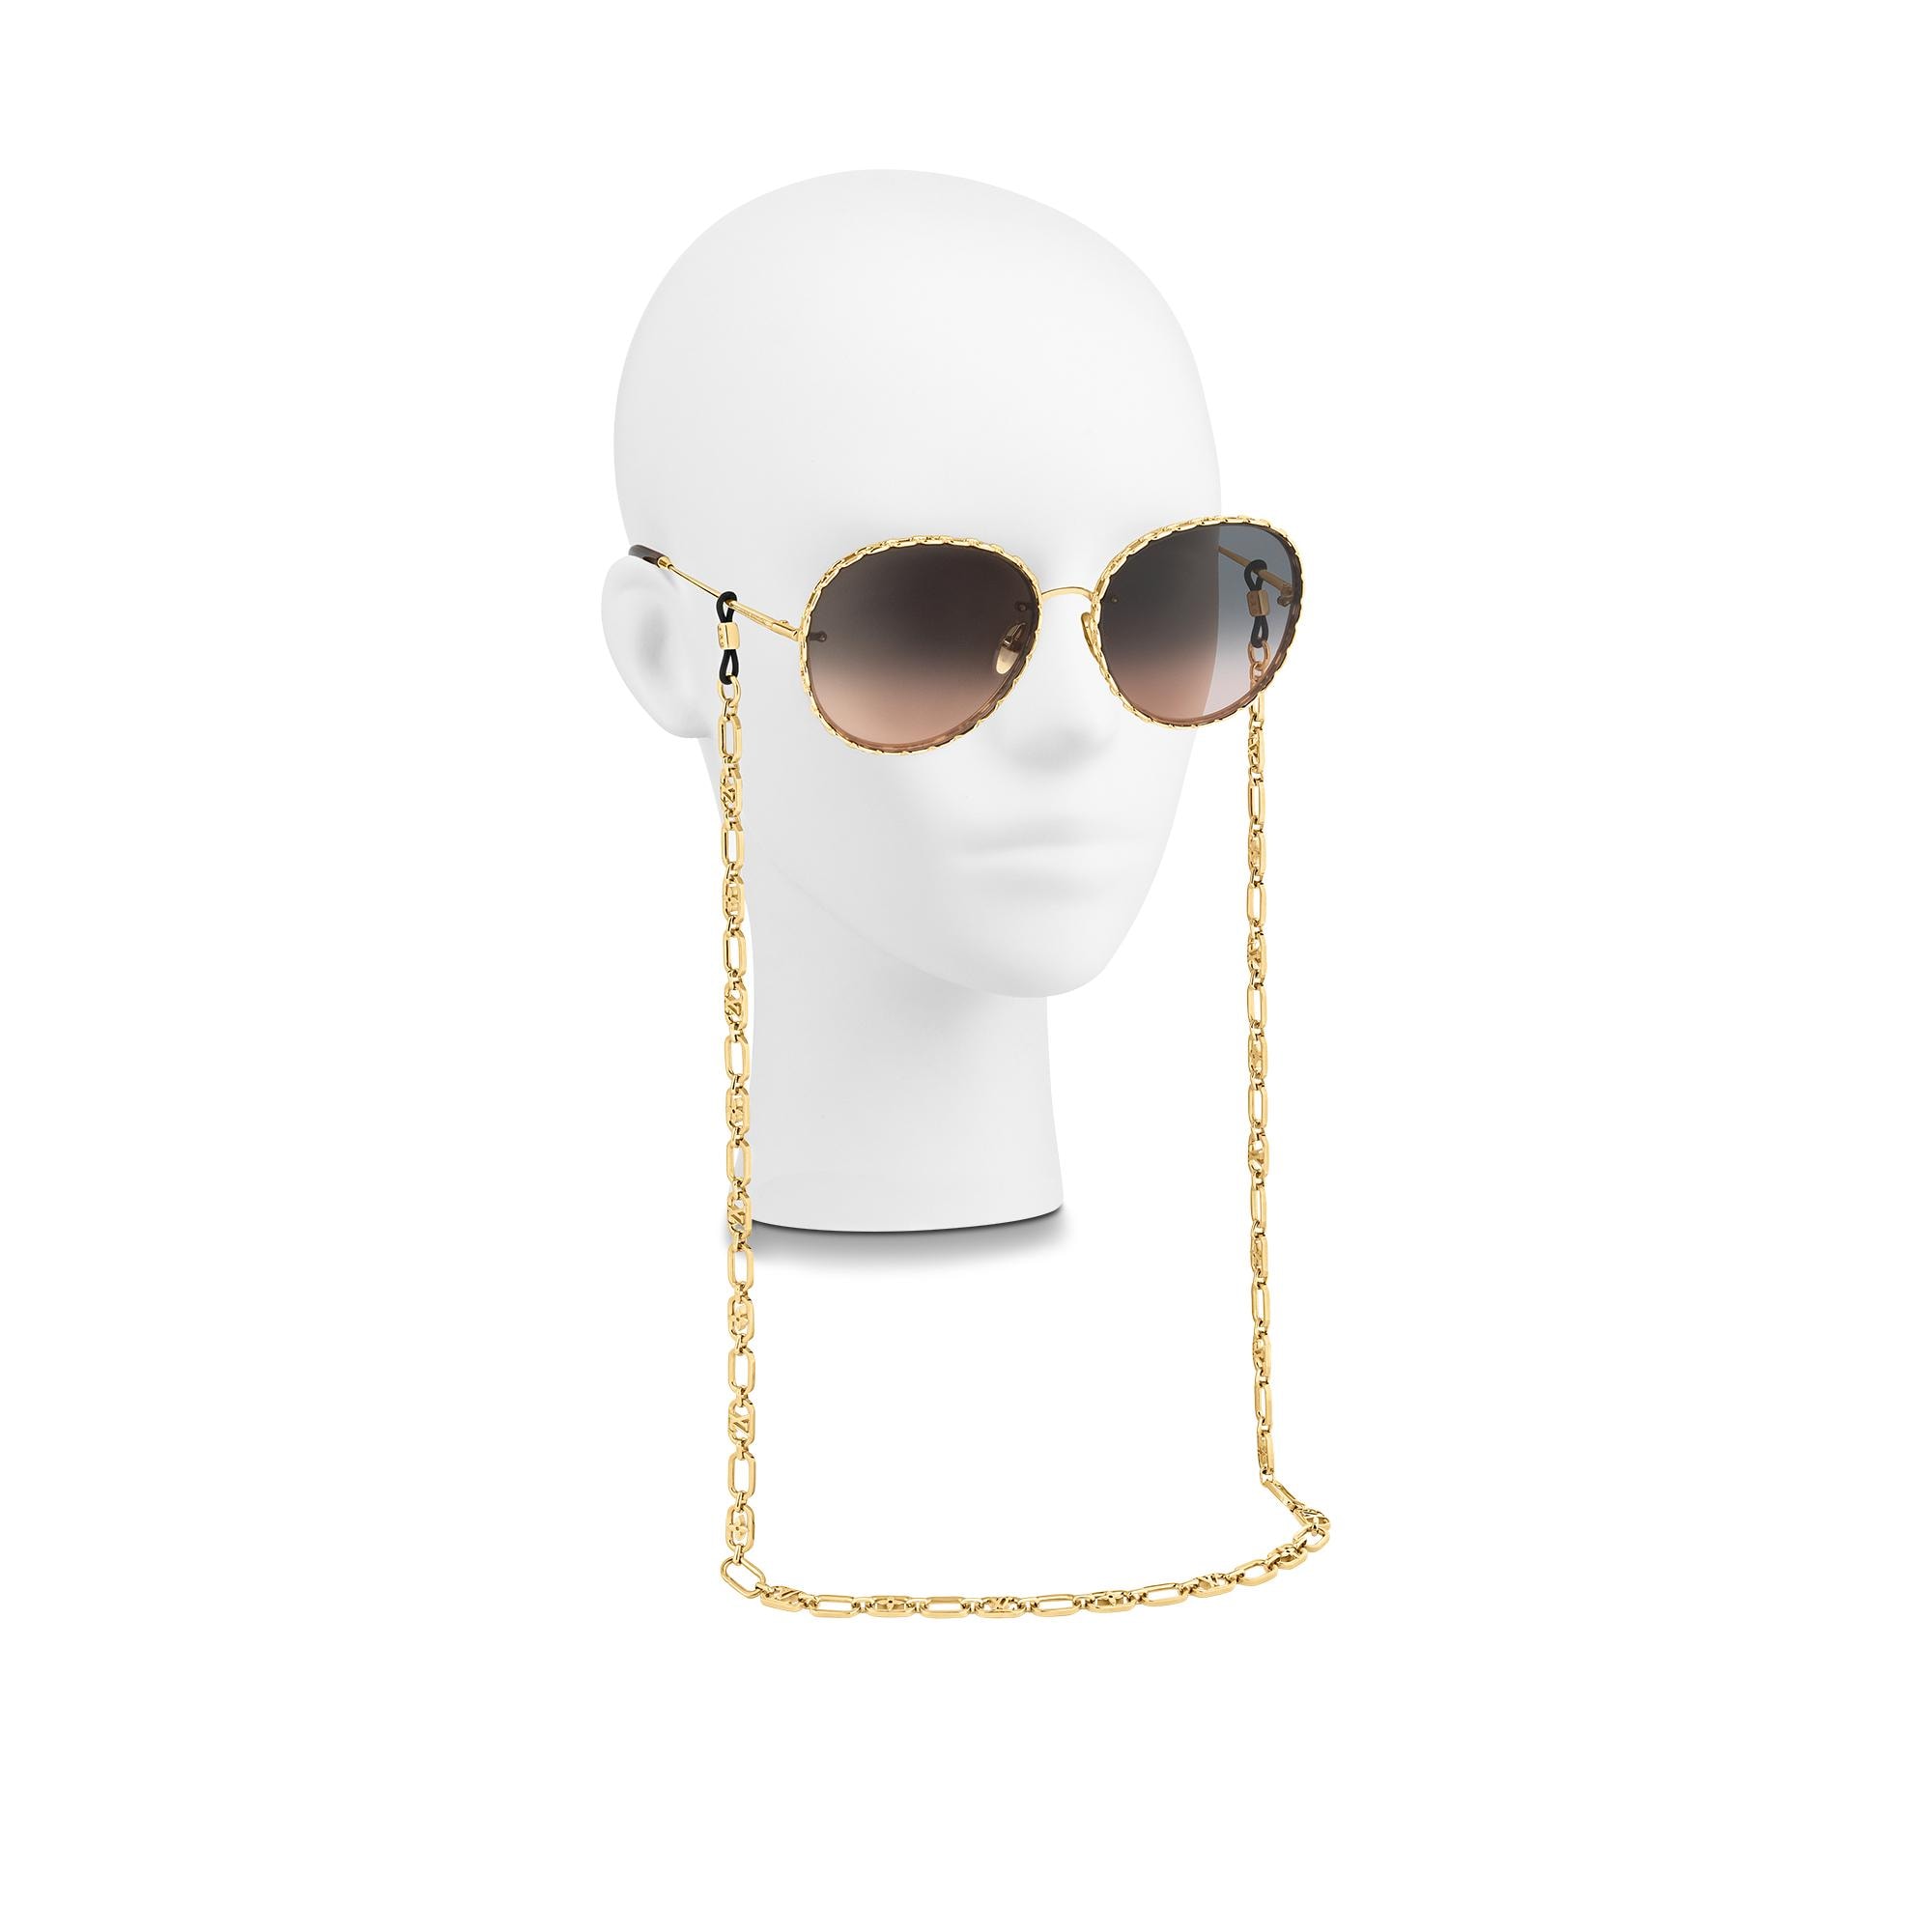 Louis Vuitton Sunglasses Chain in Gold – WOMEN – Accessories Z00025